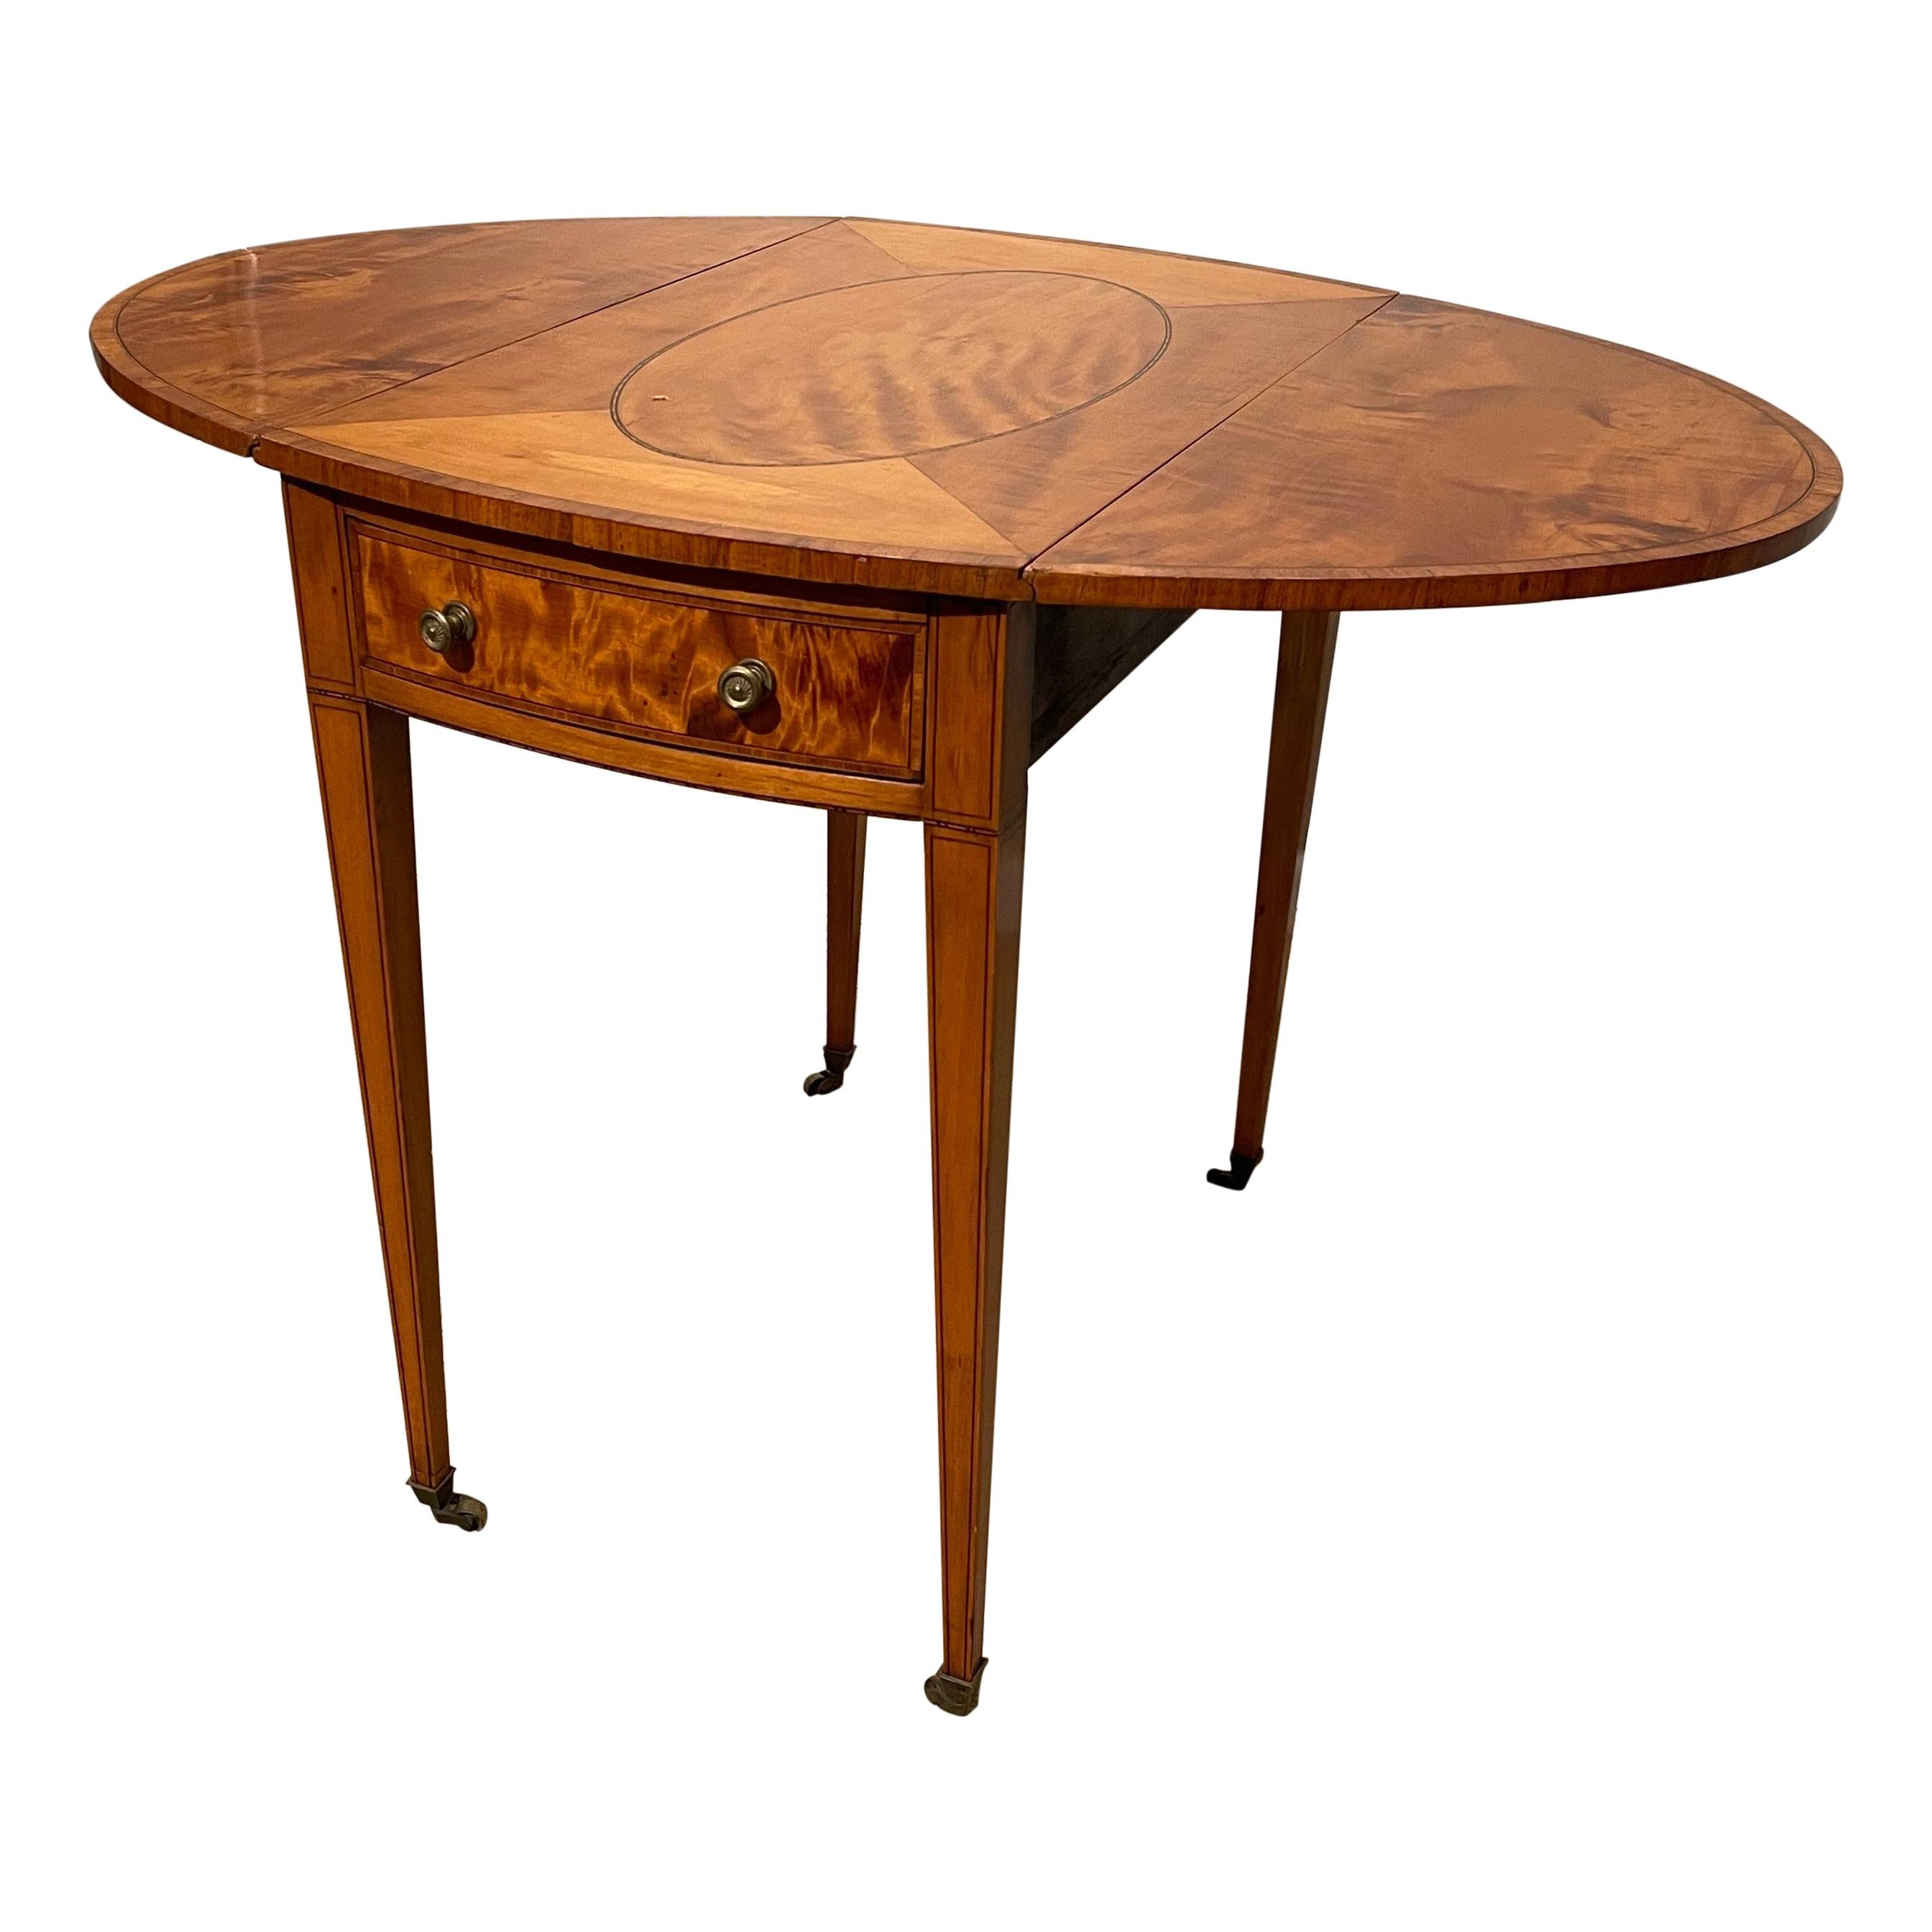 Table ovale Sheraton Pembroke en bois de citronnier, vers 1790